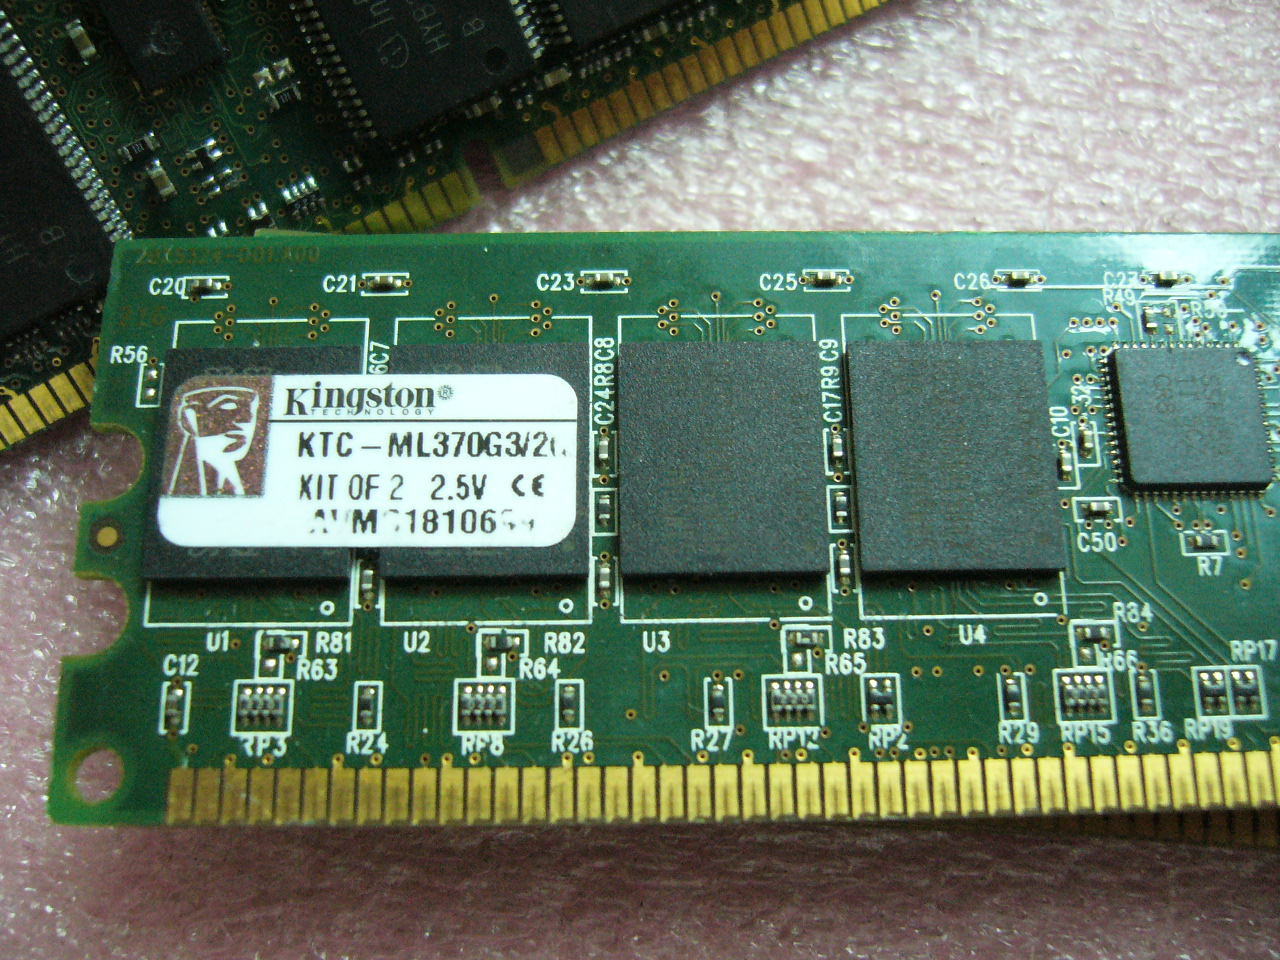 QTY 1x 1GB Kingston KTC-ML370G3/2G DDR 266,PC2100R ECC Registered Server memory - Click Image to Close